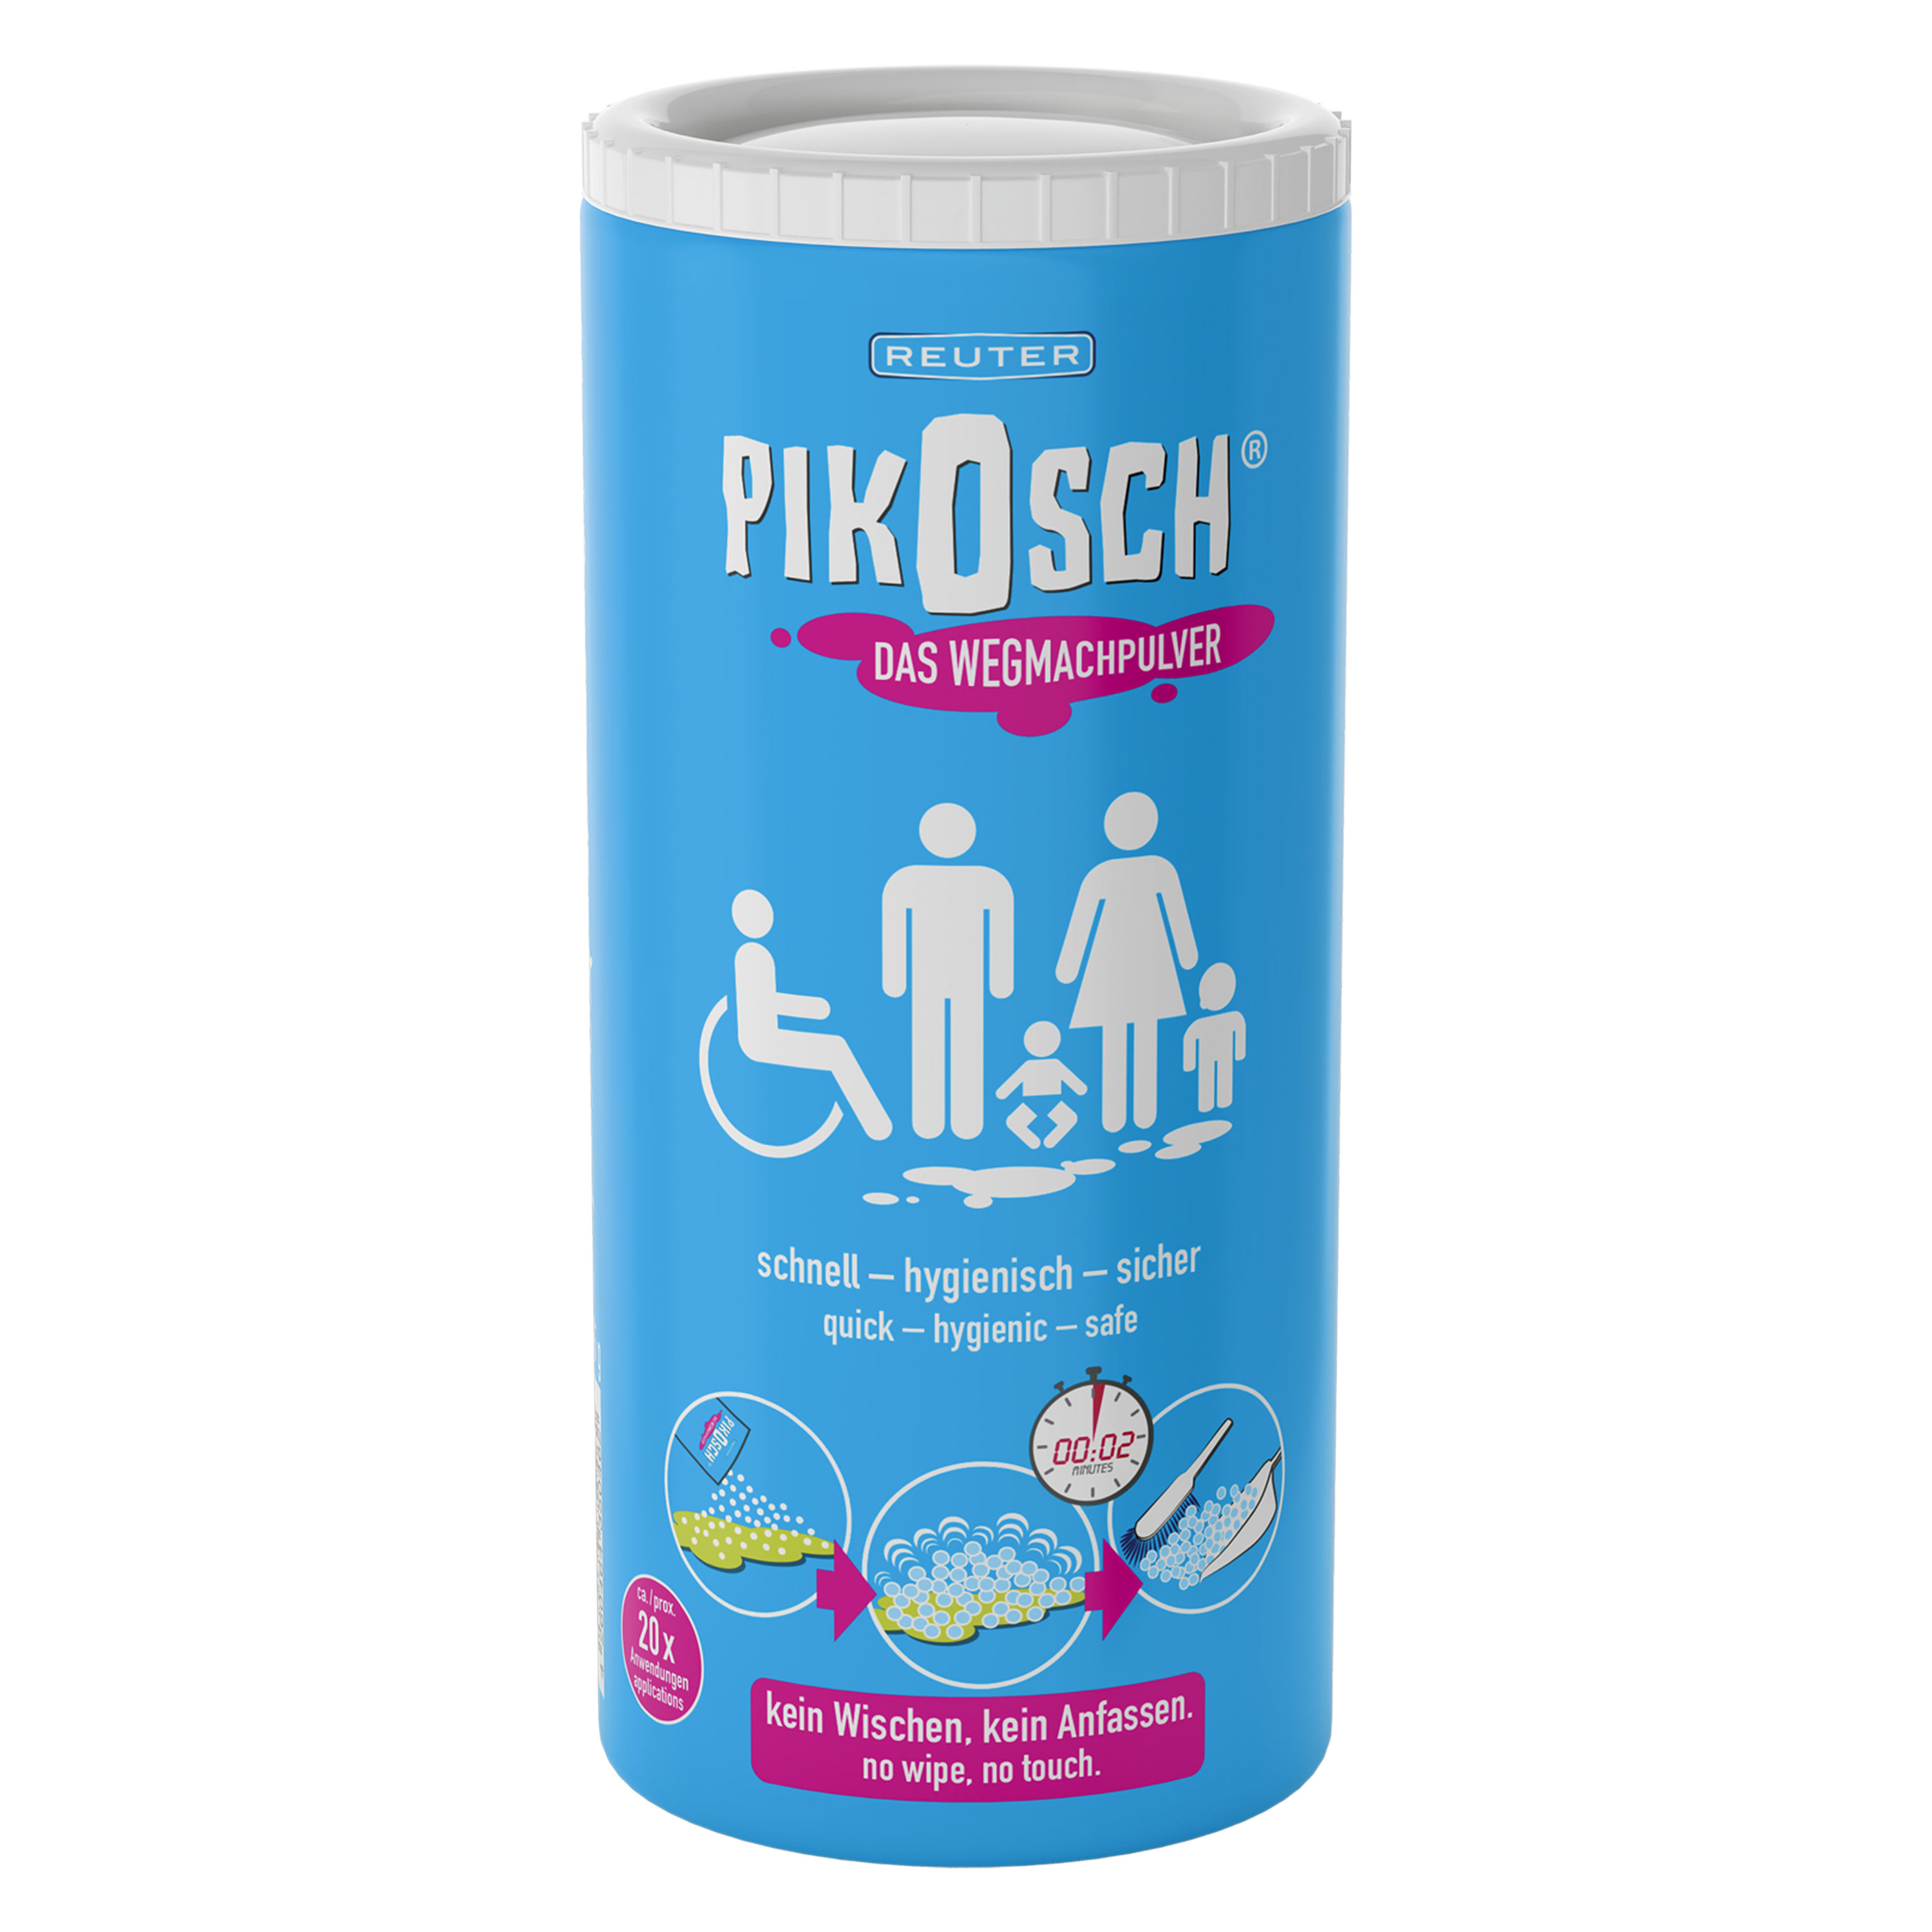 PIKOSCH - Das Wegmachpulver